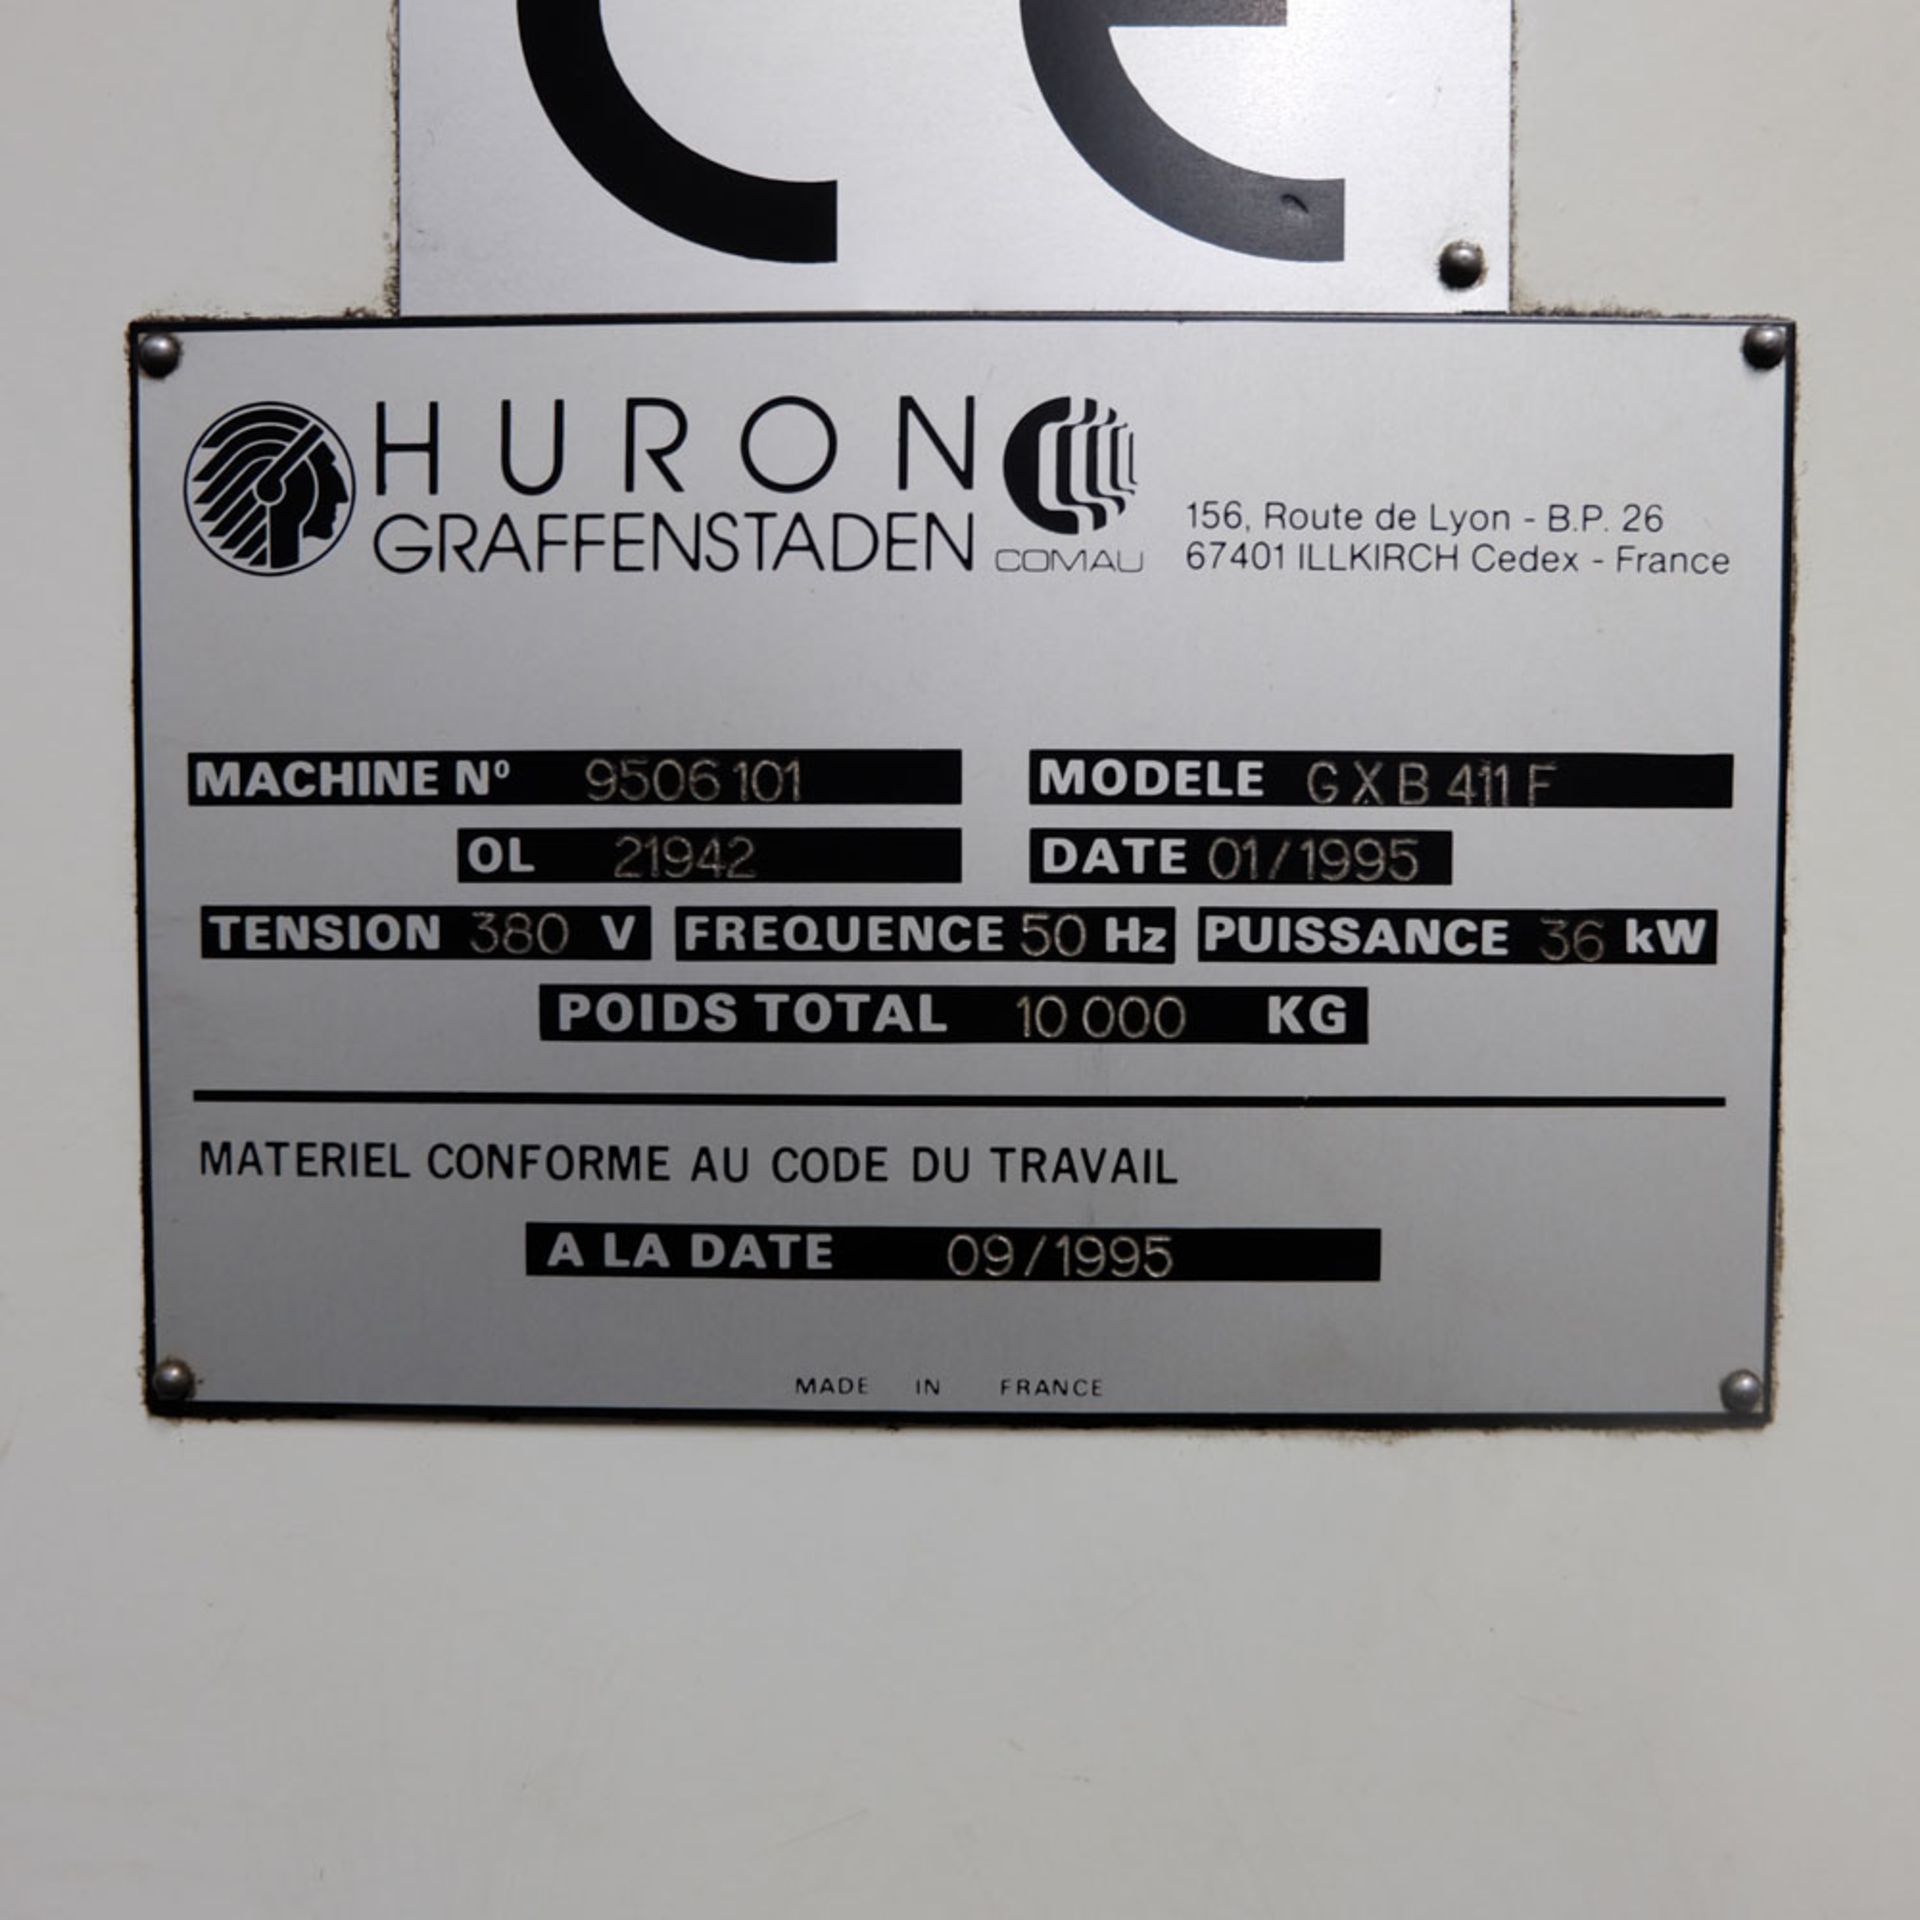 Huron GX 411 F Bed Type Milling Machine. Control Unit: CNC (HEIDENHAIN TNC 415B). - Image 10 of 12